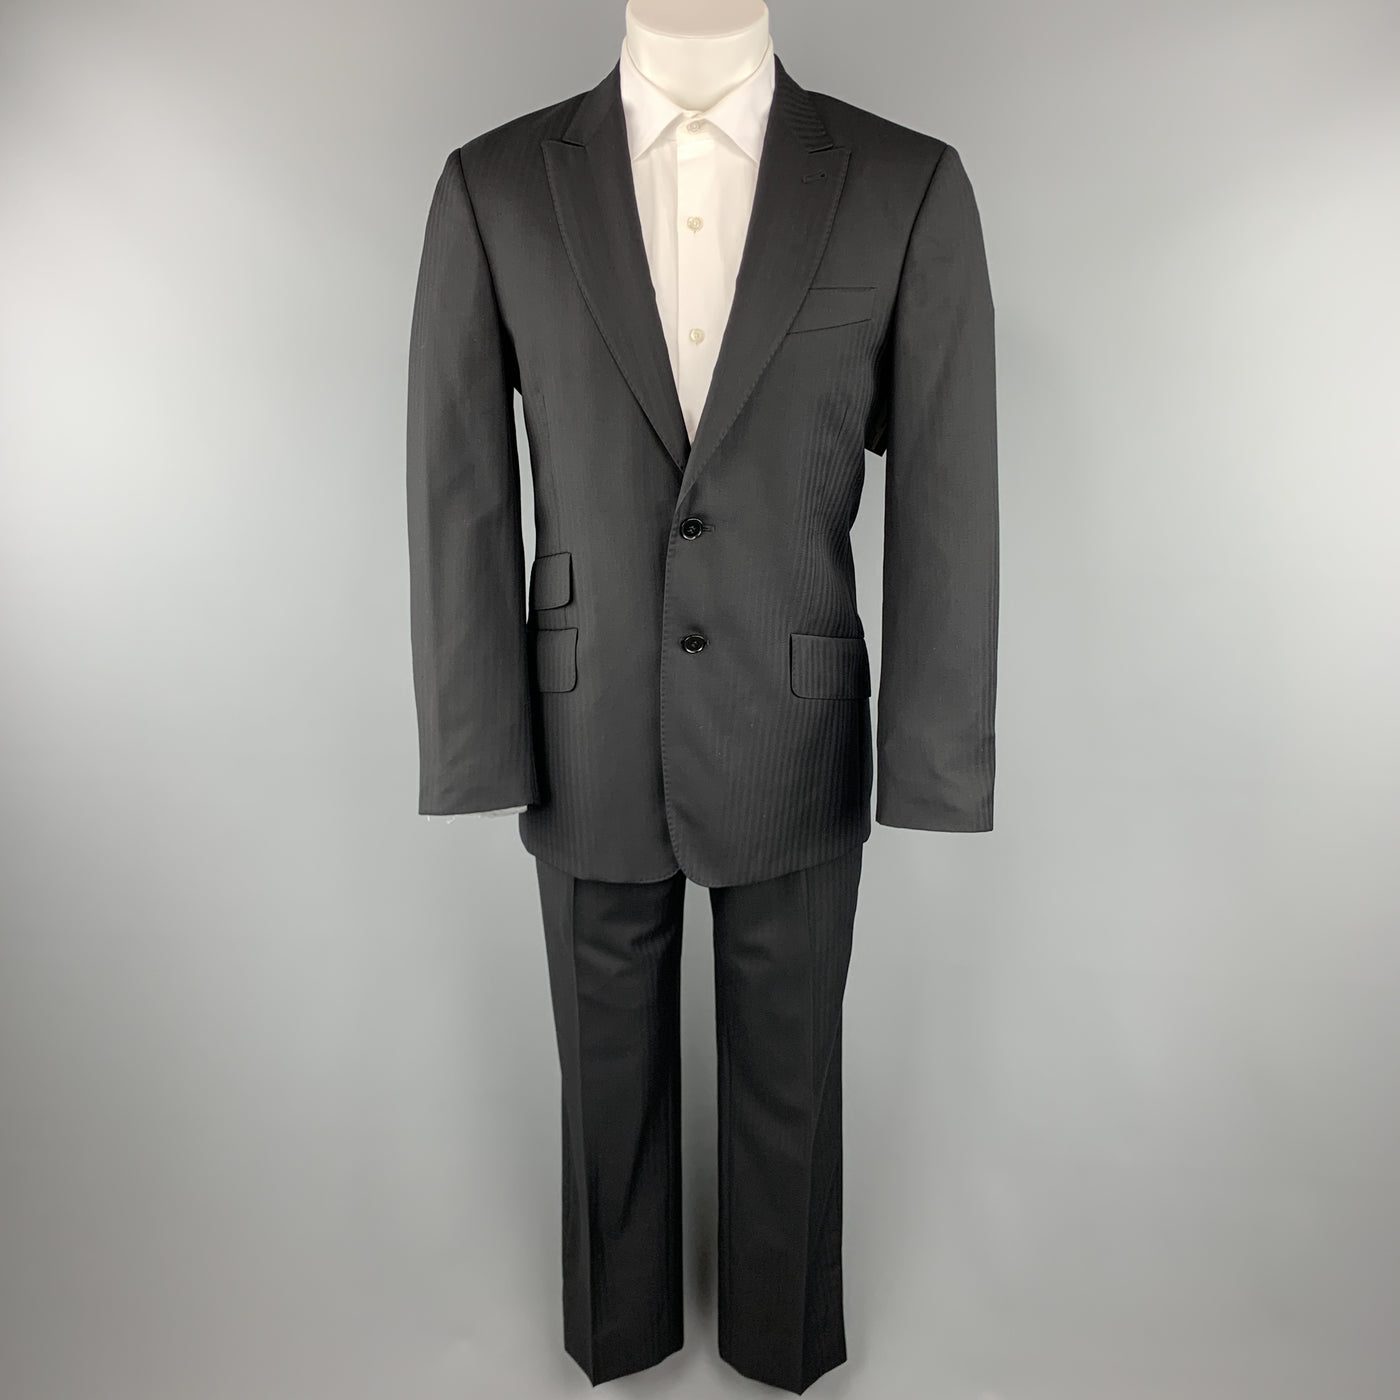 PAUL SMITH Size 38 Black Herringbone Wool Peak Lapel Suit